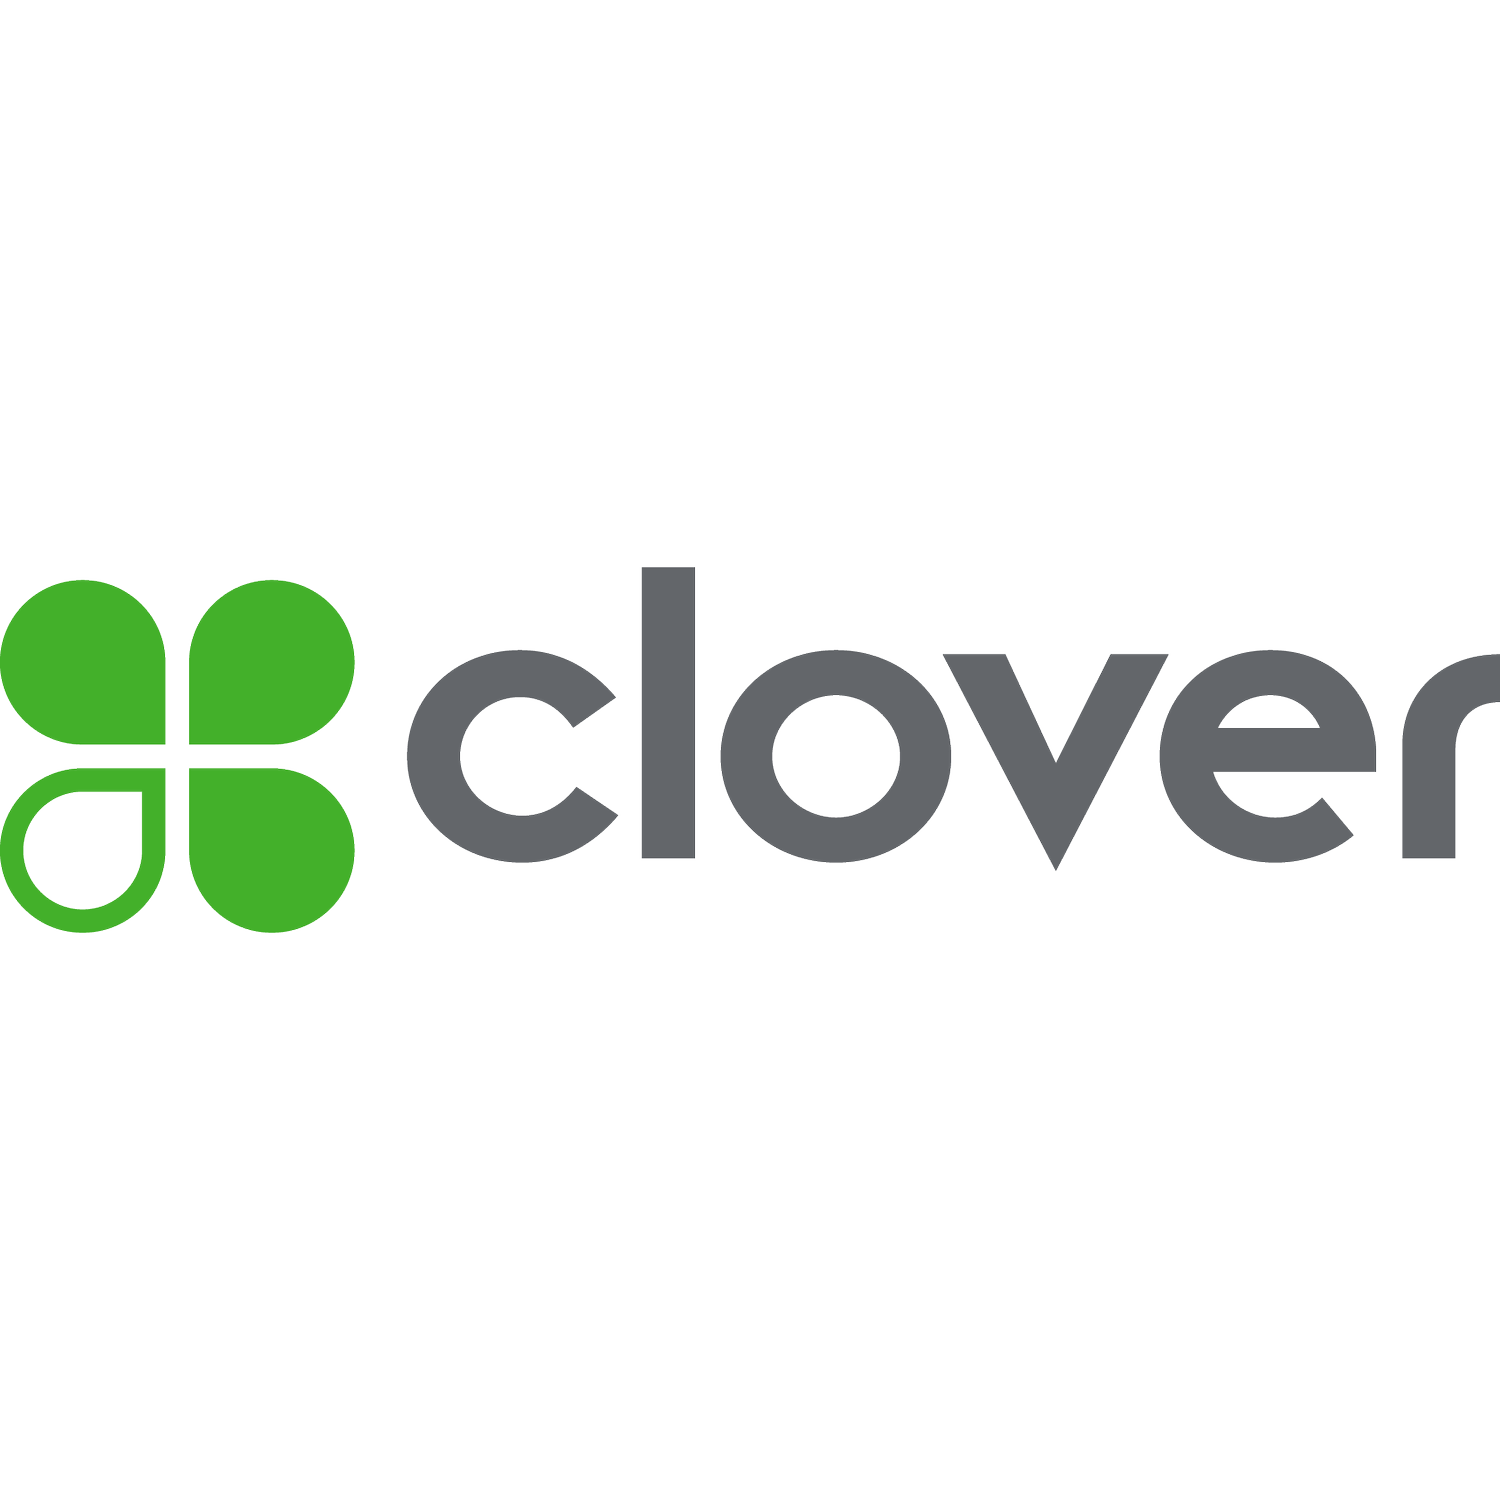 Legend clover. Clover Finance. Клевер эмблема. Кловер логотип. Clover криптовалюта.